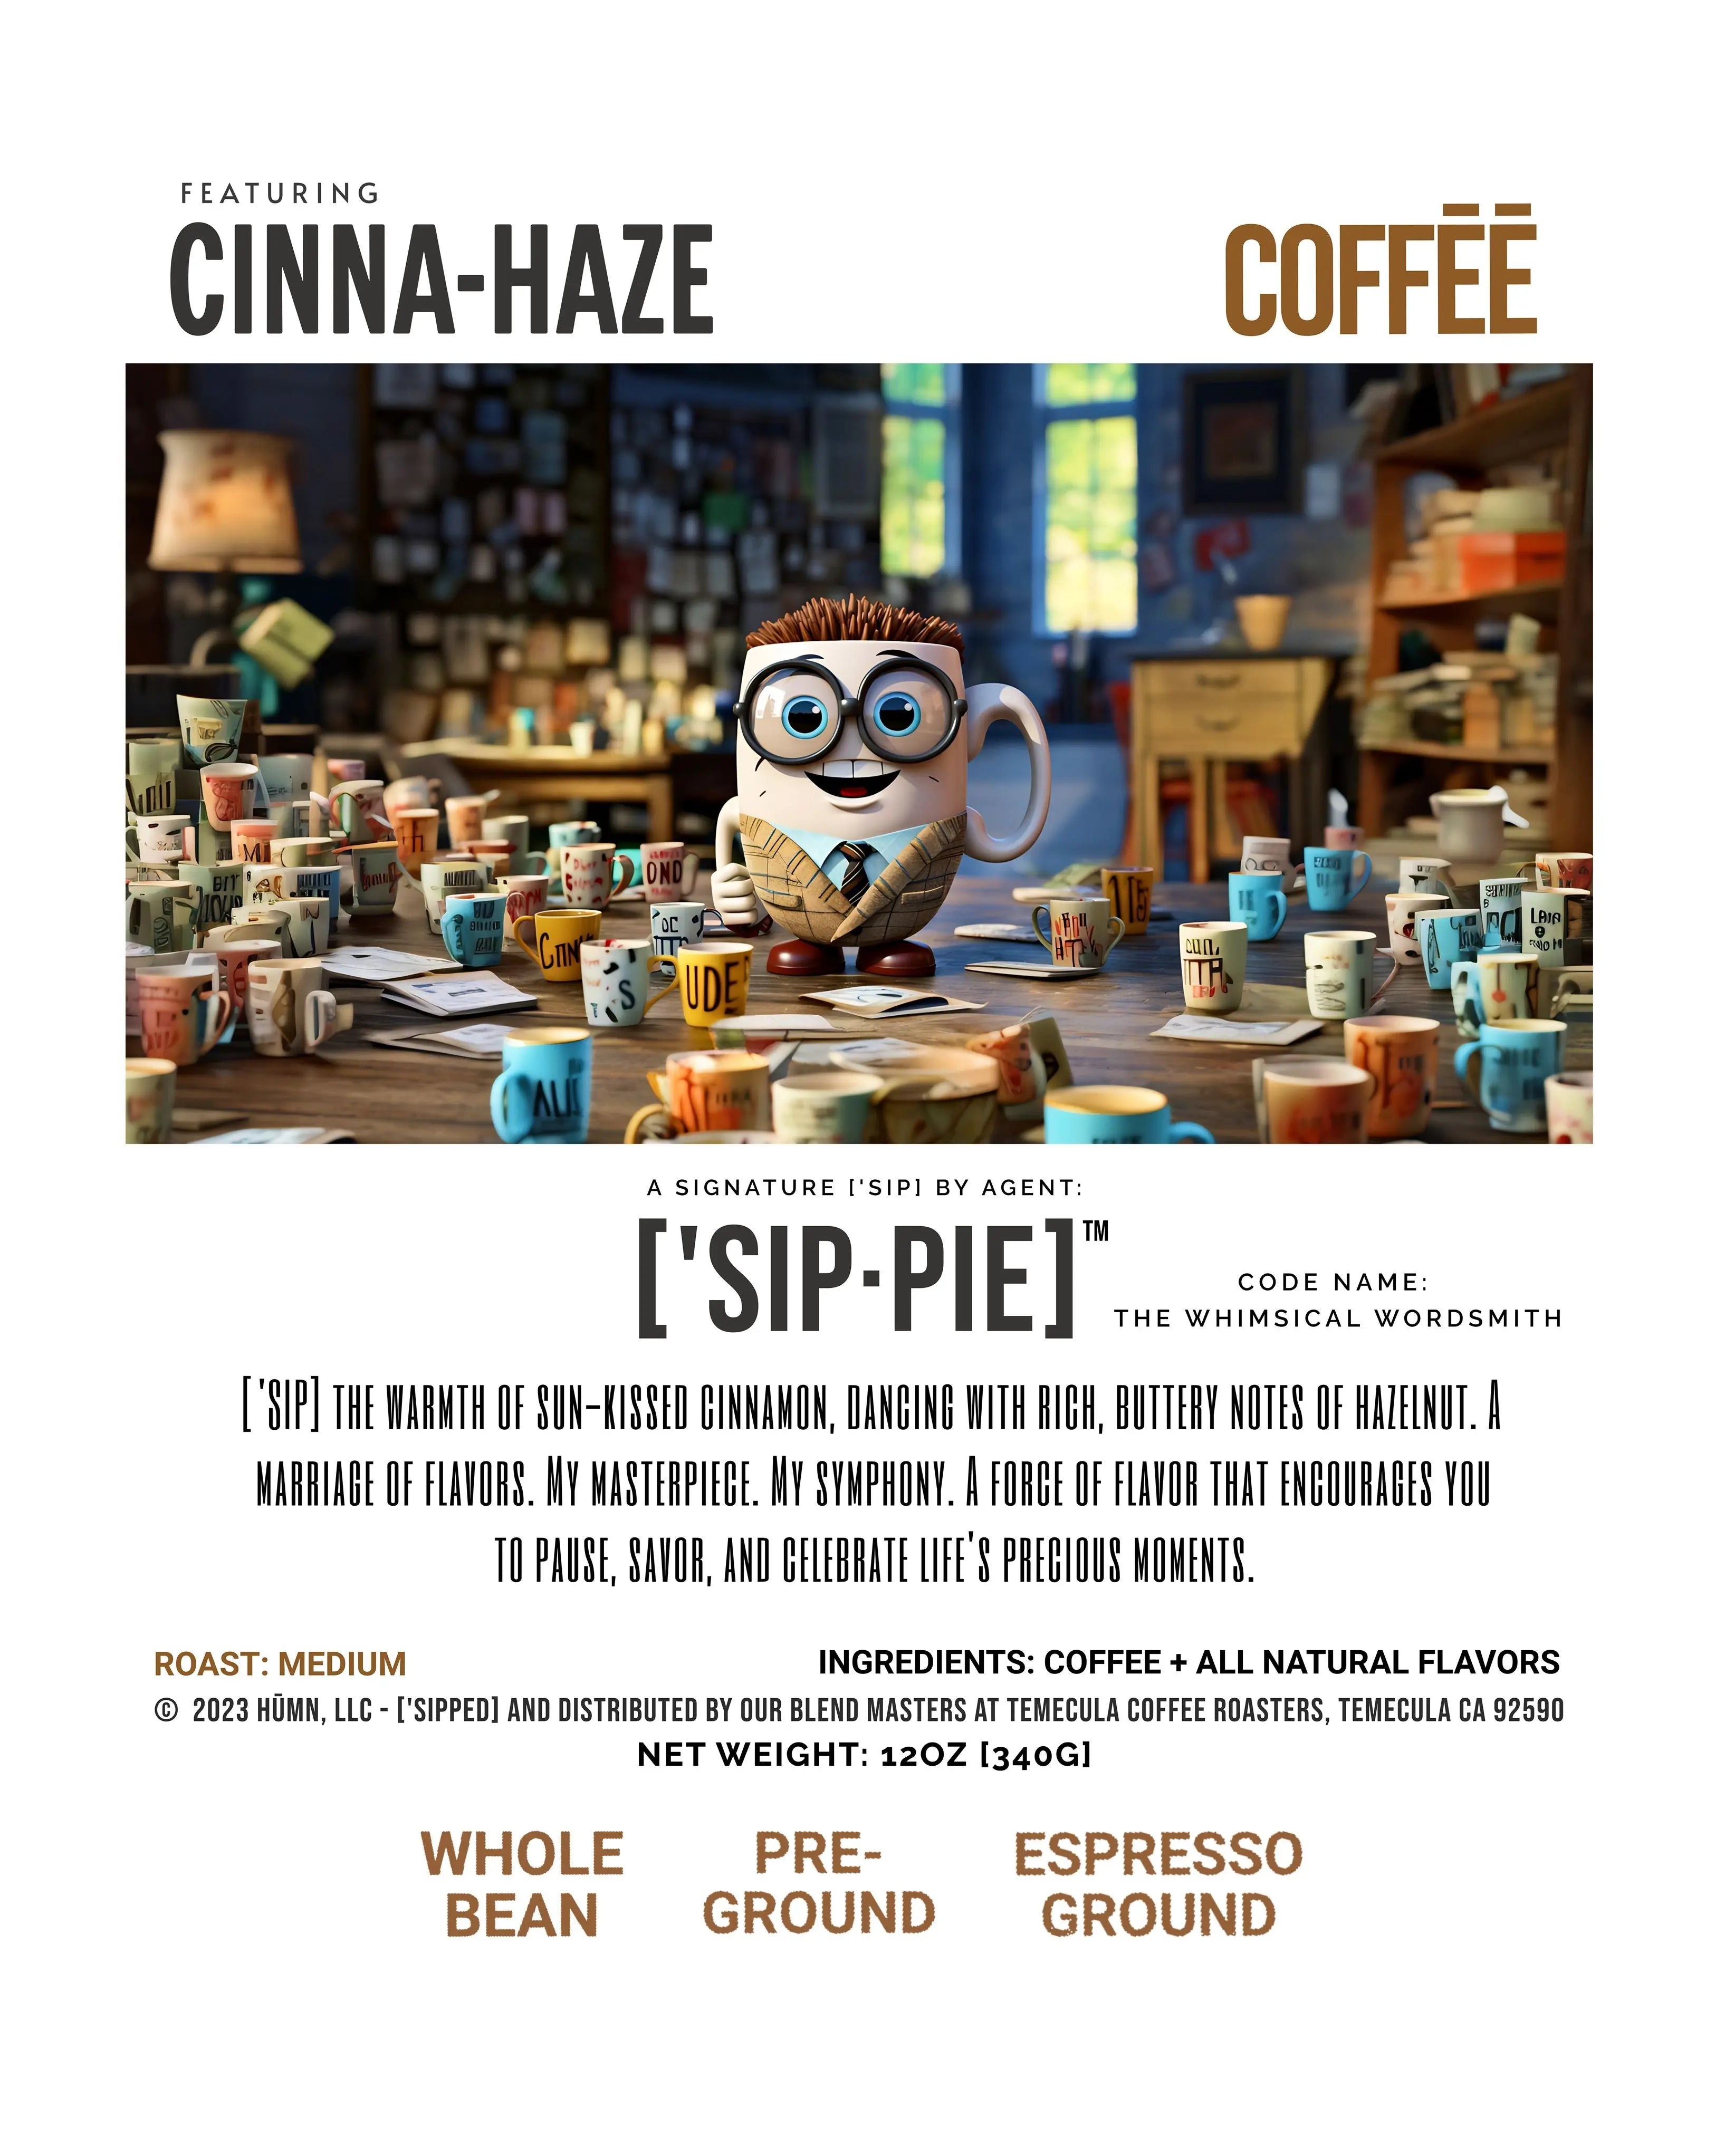 Cinnamon Hazelnut Coffee - Sippie's Cinna-Haze ['SIP·PERS]™